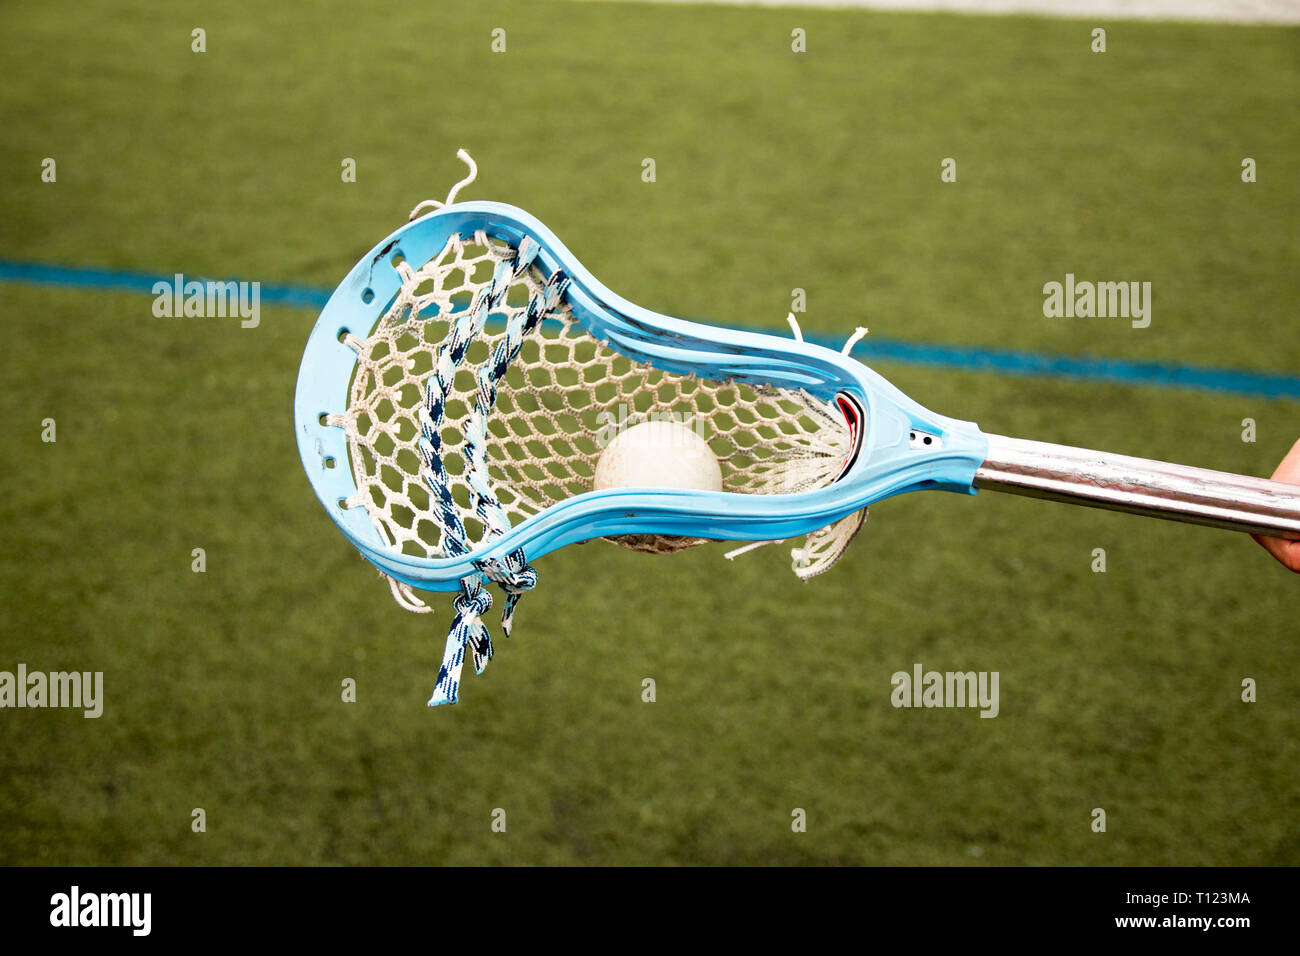 Carolina blue lacrosse stick carrying a ball Stock Photo